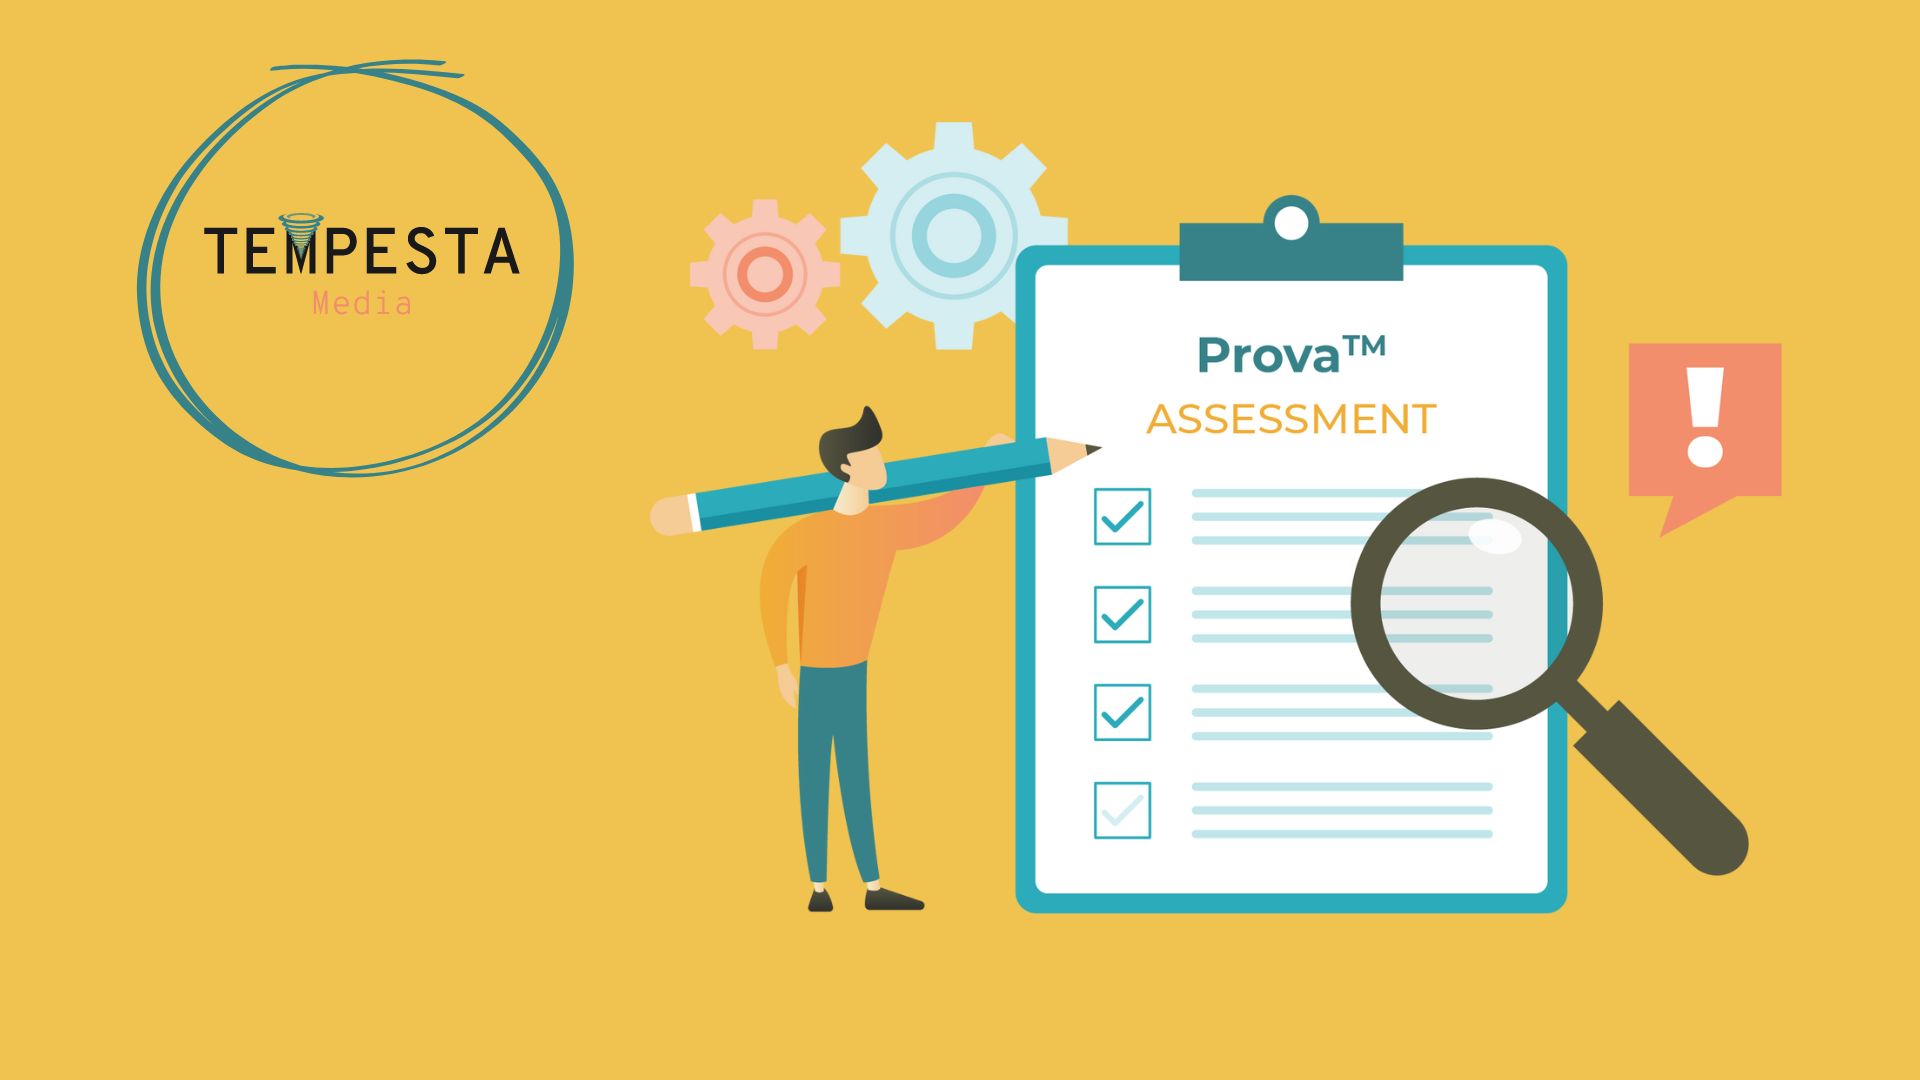 Tempesta Media’s Prova™ Assessment Is A Digital Marketing Game-Changer For B2B Businesses